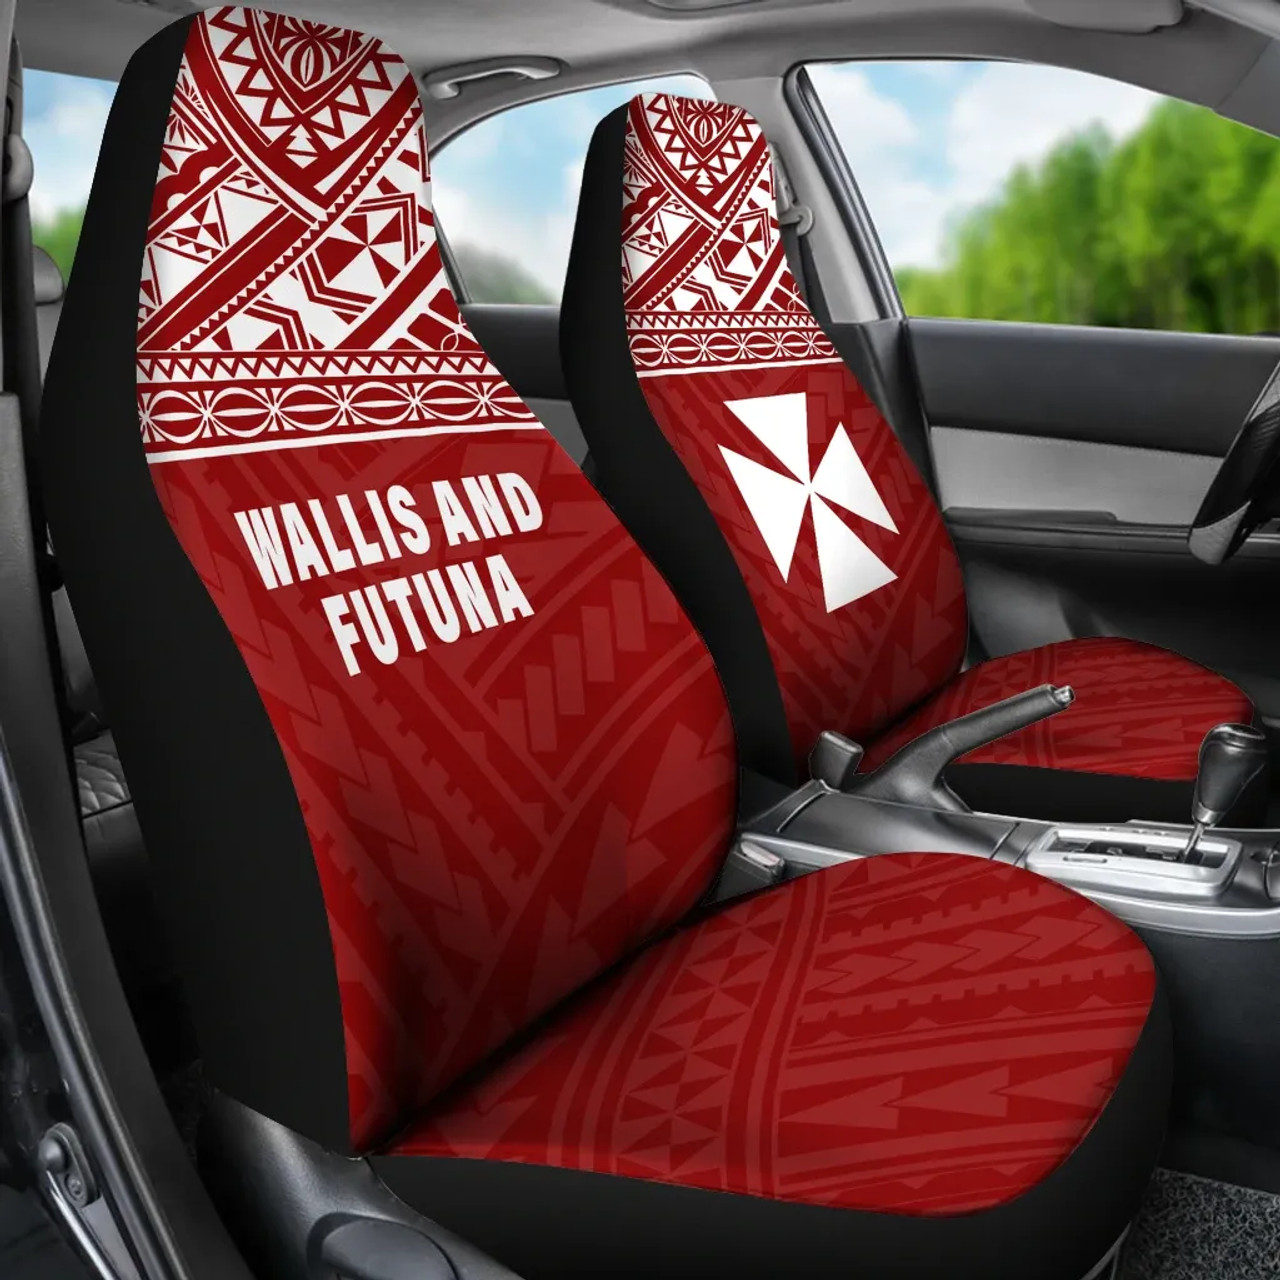 Wallis And Futuna Car Seat Covers - Wallis And Futuna Coat Of Arms Polynesian Tattoo Red